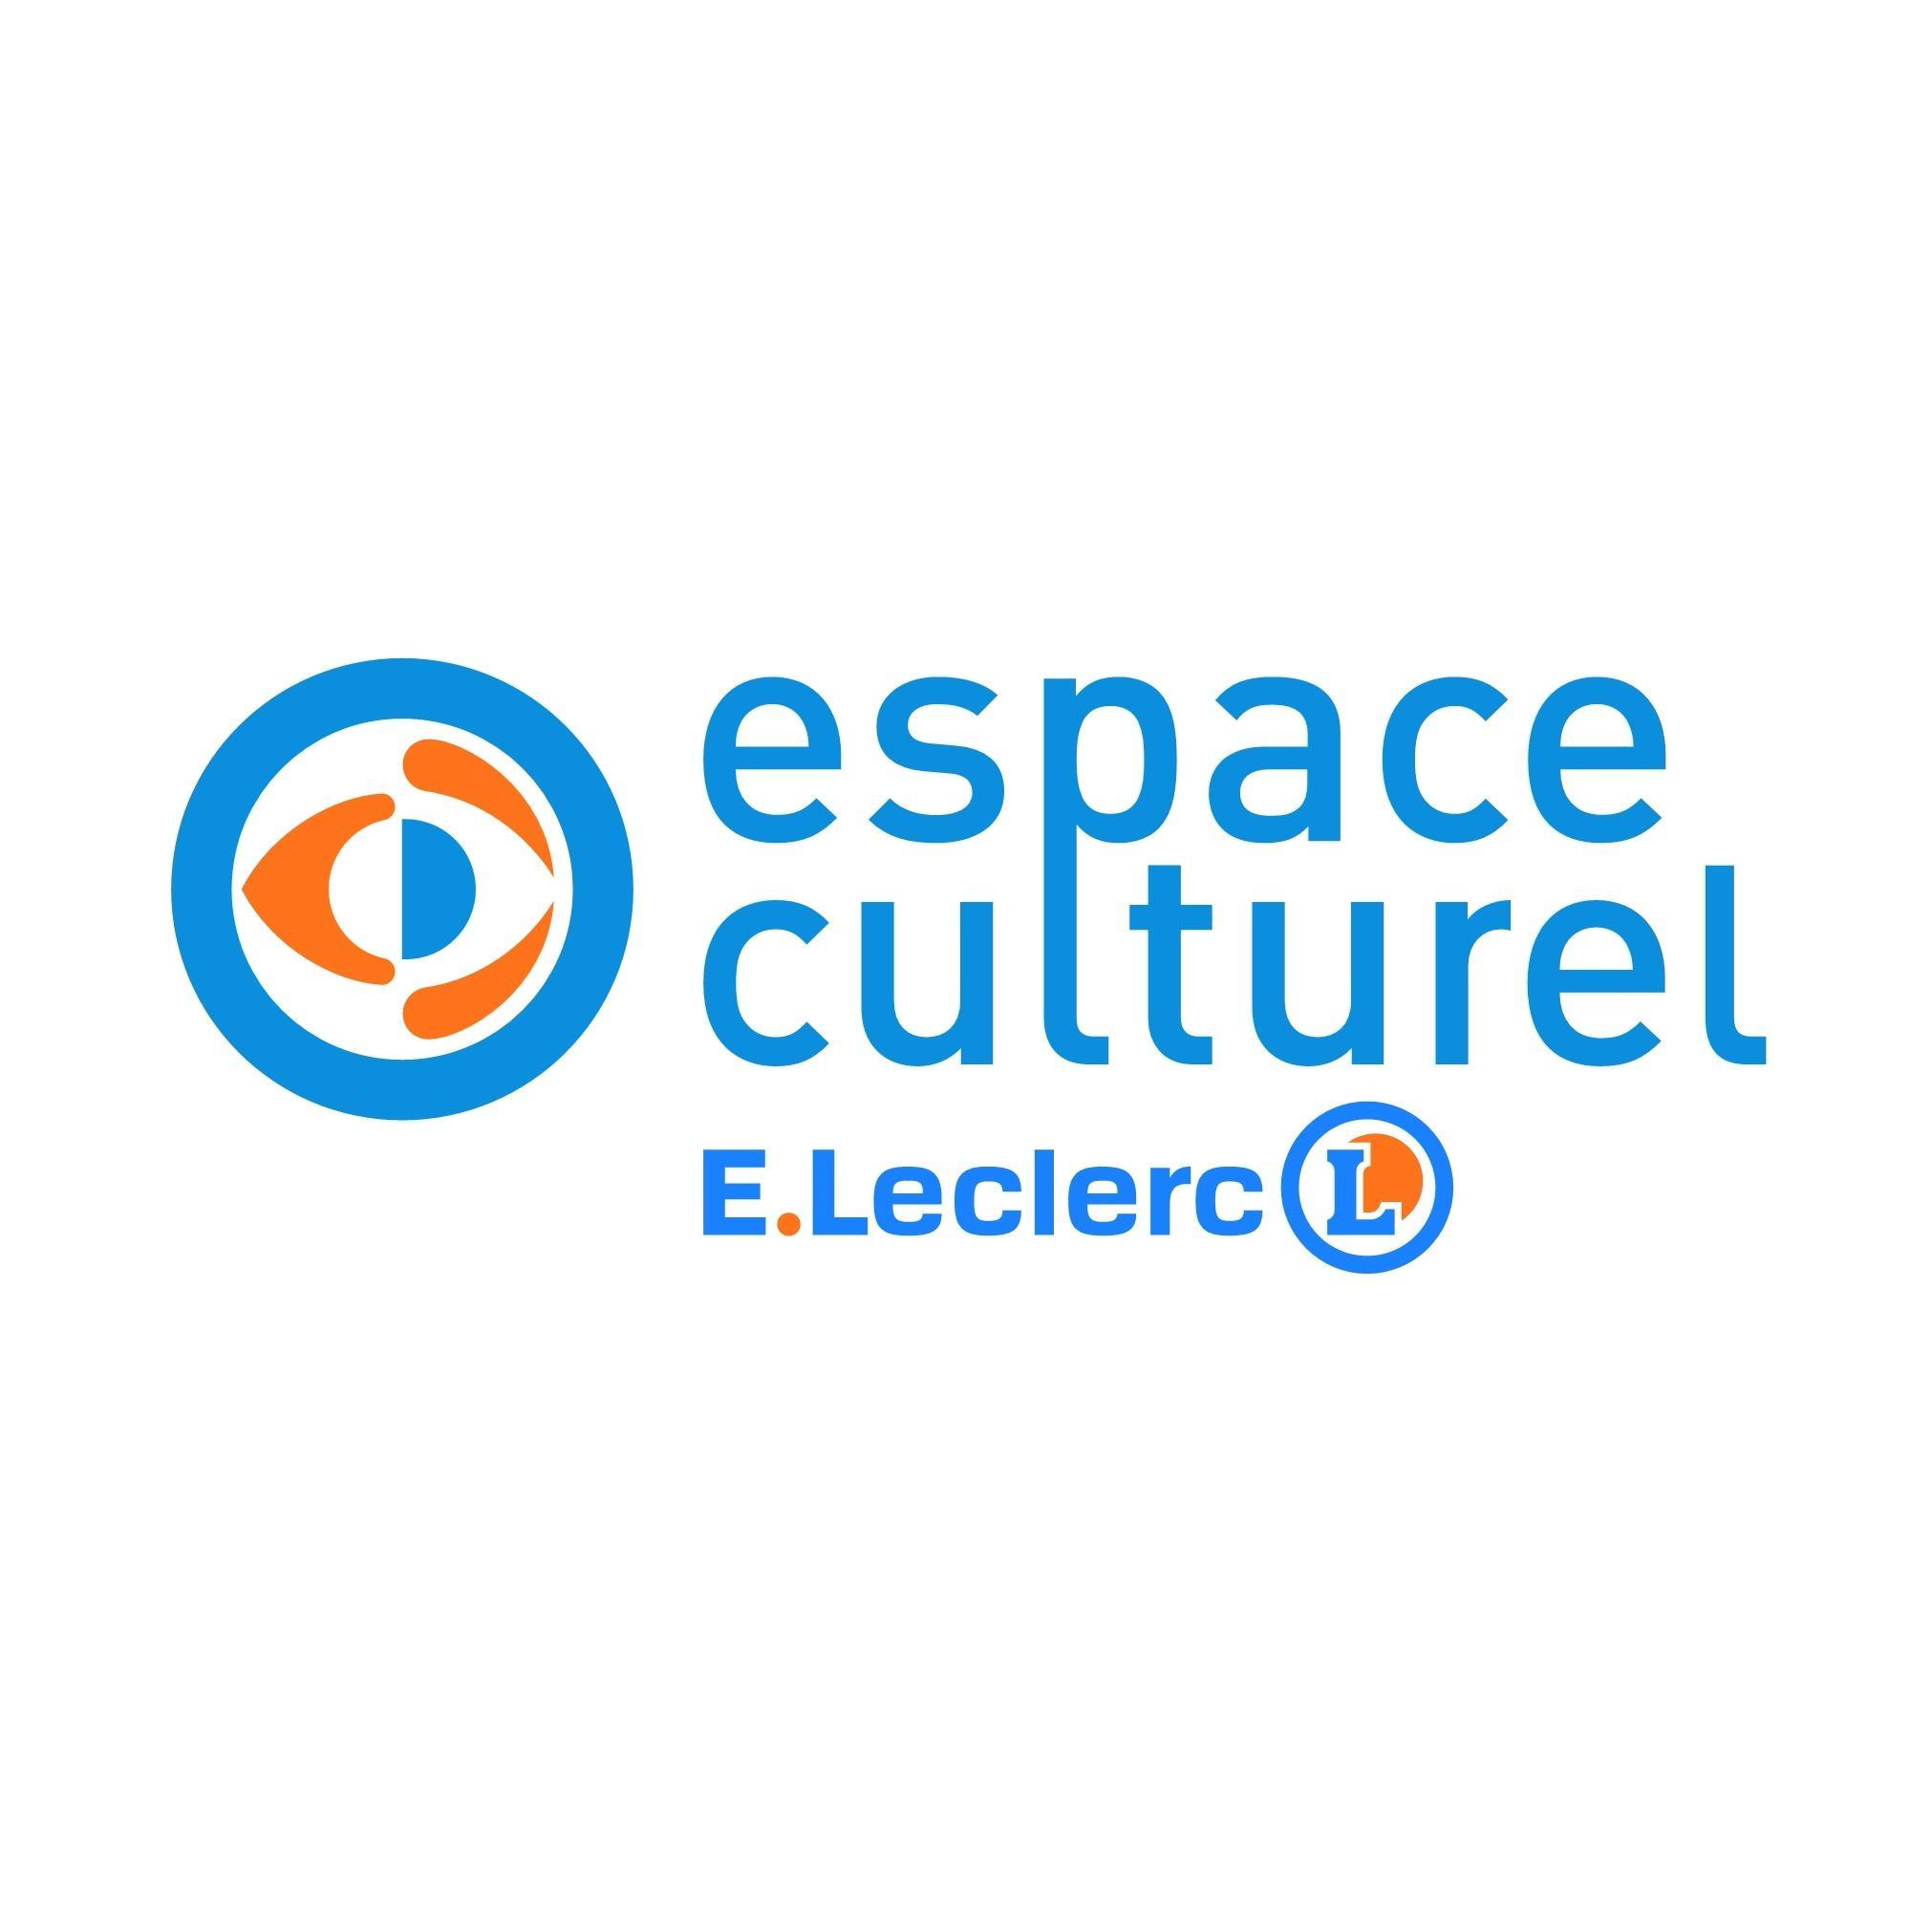 E.leclerc Espace Culturel Vernon